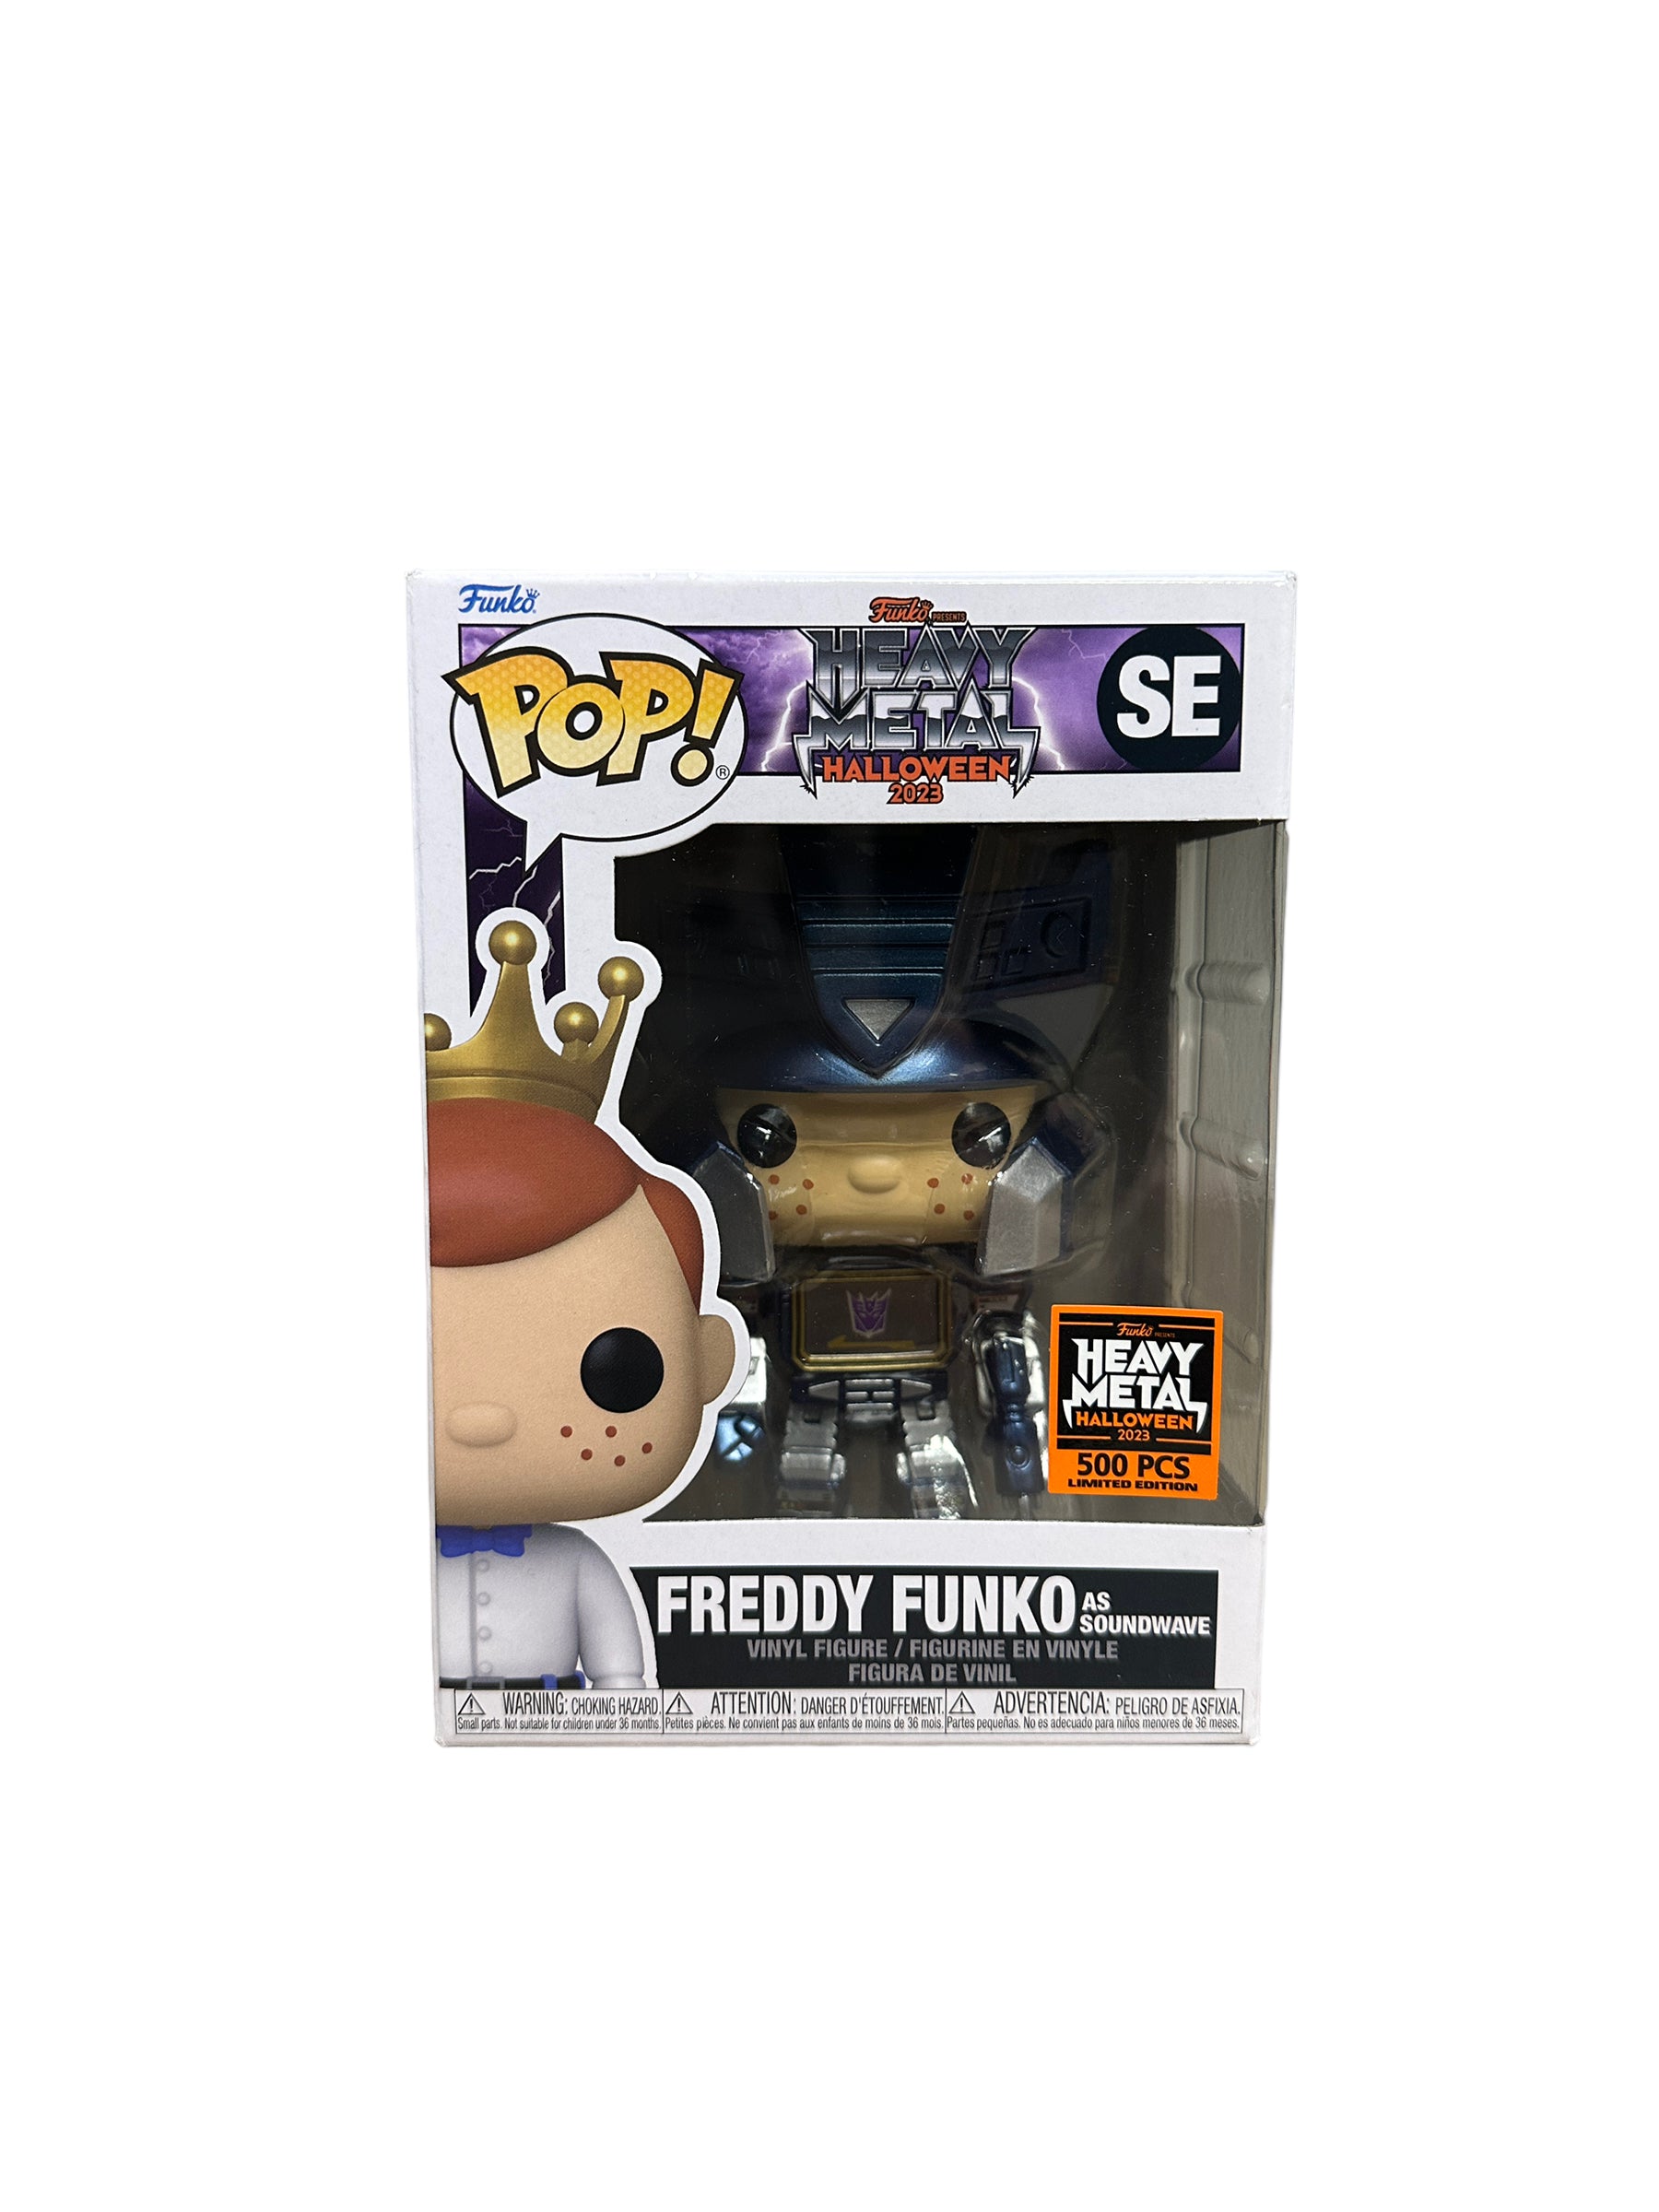 Freddy Funko as Soundwave (Metallic) Funko Pop! - Transformers - Heavy Metal Halloween 2023 Exclusive LE500 Pcs - Condition 7/10